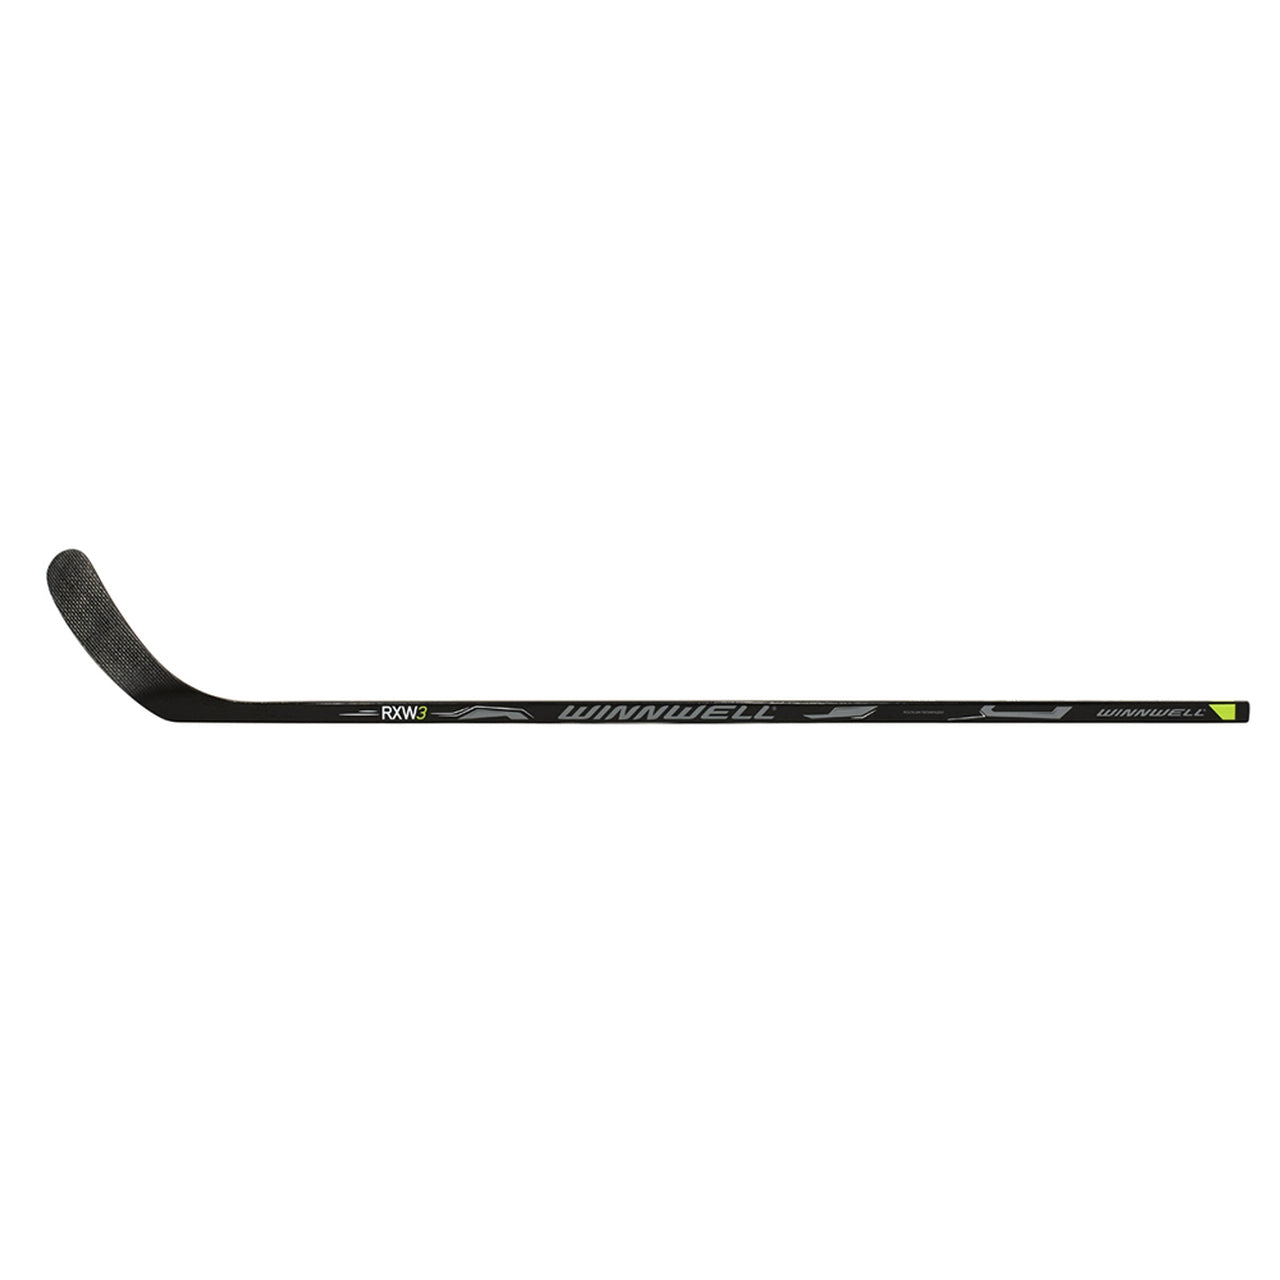 Winnwell Hockey Stick Size 59 In Left Hand RXW3 Flex PS119